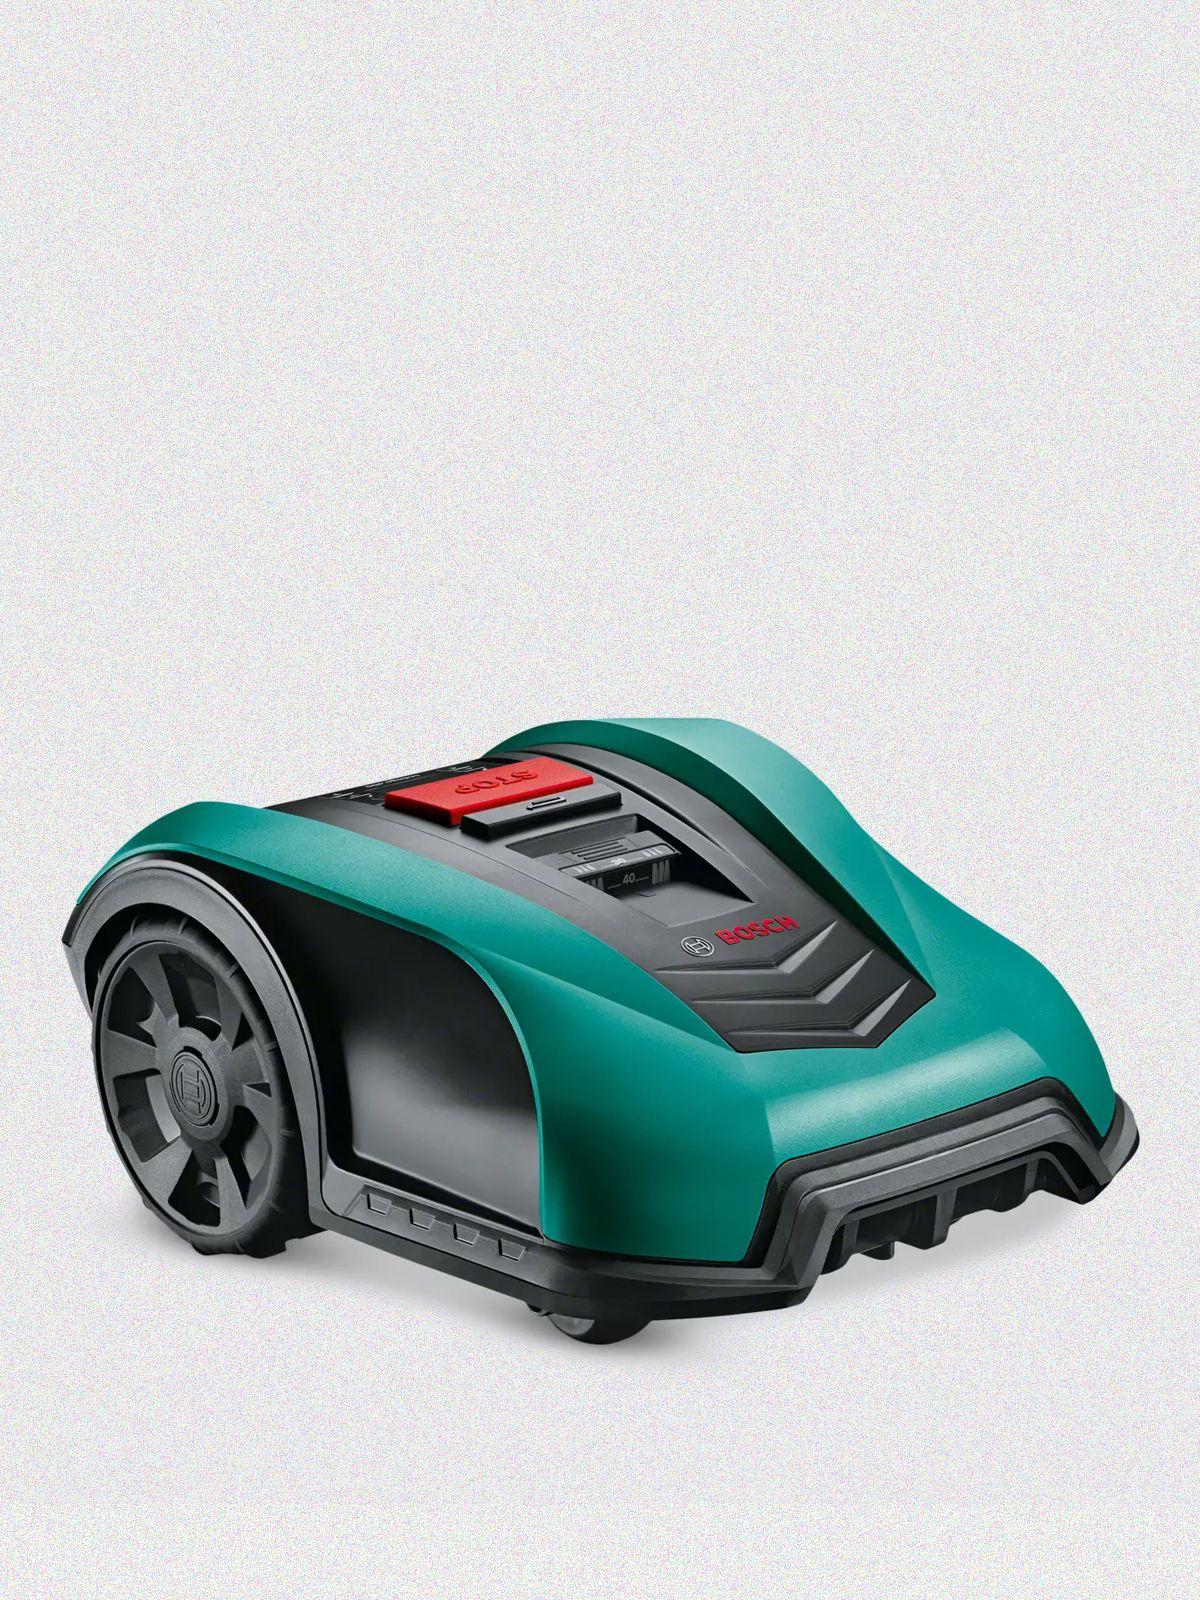 Bosch Indego 350 Robotic Lawnmower